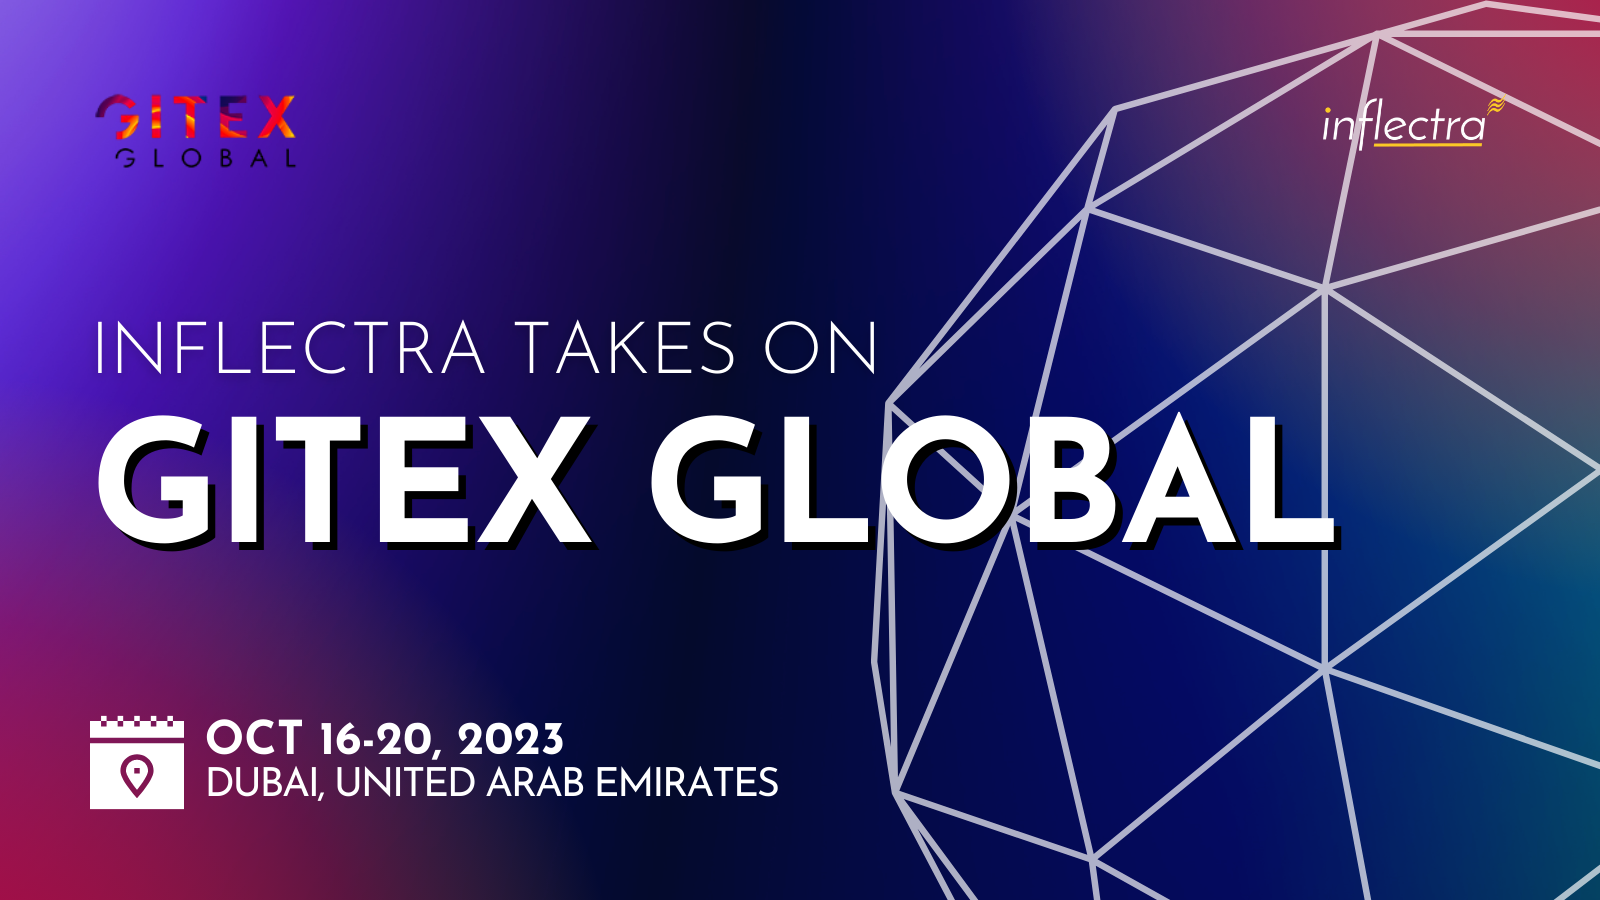 inflectra-sponsors-gitex-global-in-dubai-united-arab-emirates-image